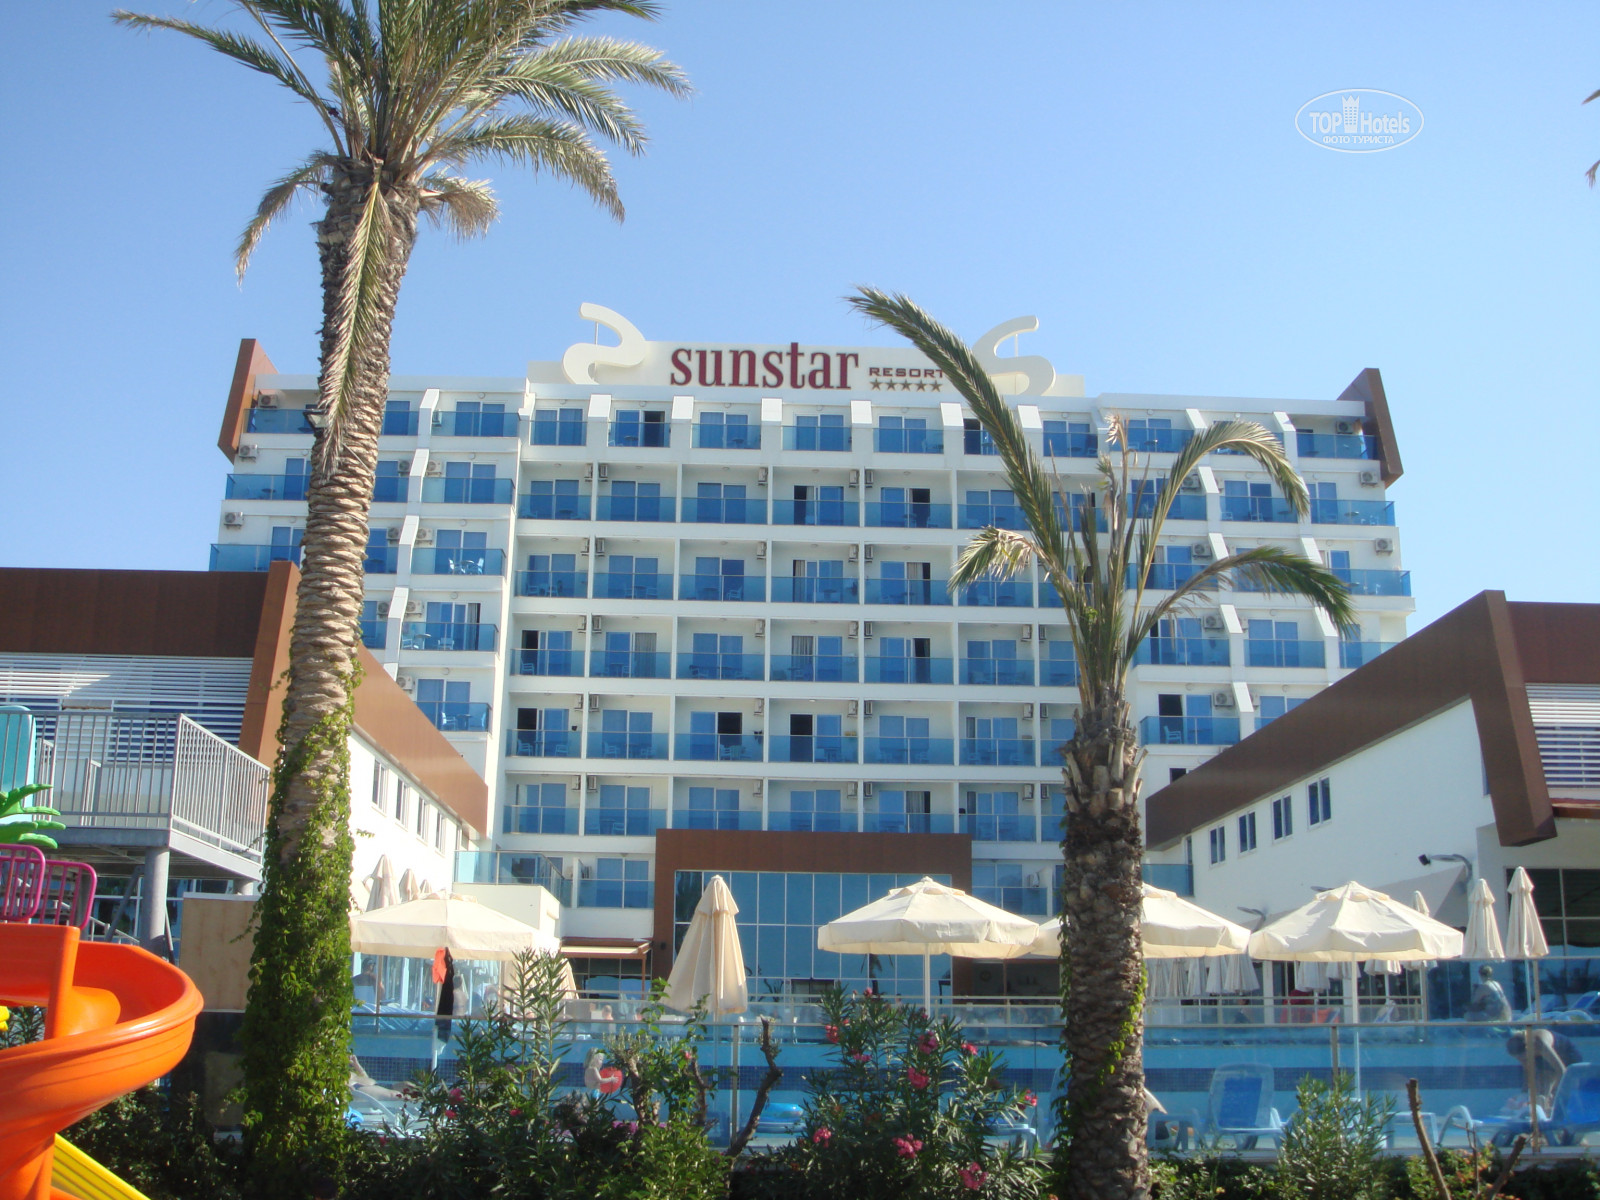 Sunstar местоположение. Sunstar Resort 5 Турция Аланья. Sun Star Resort Hotel 5. Sun Star Resort Hotel 5 Турция. Sun Star Resort Hotel 5 Алания.